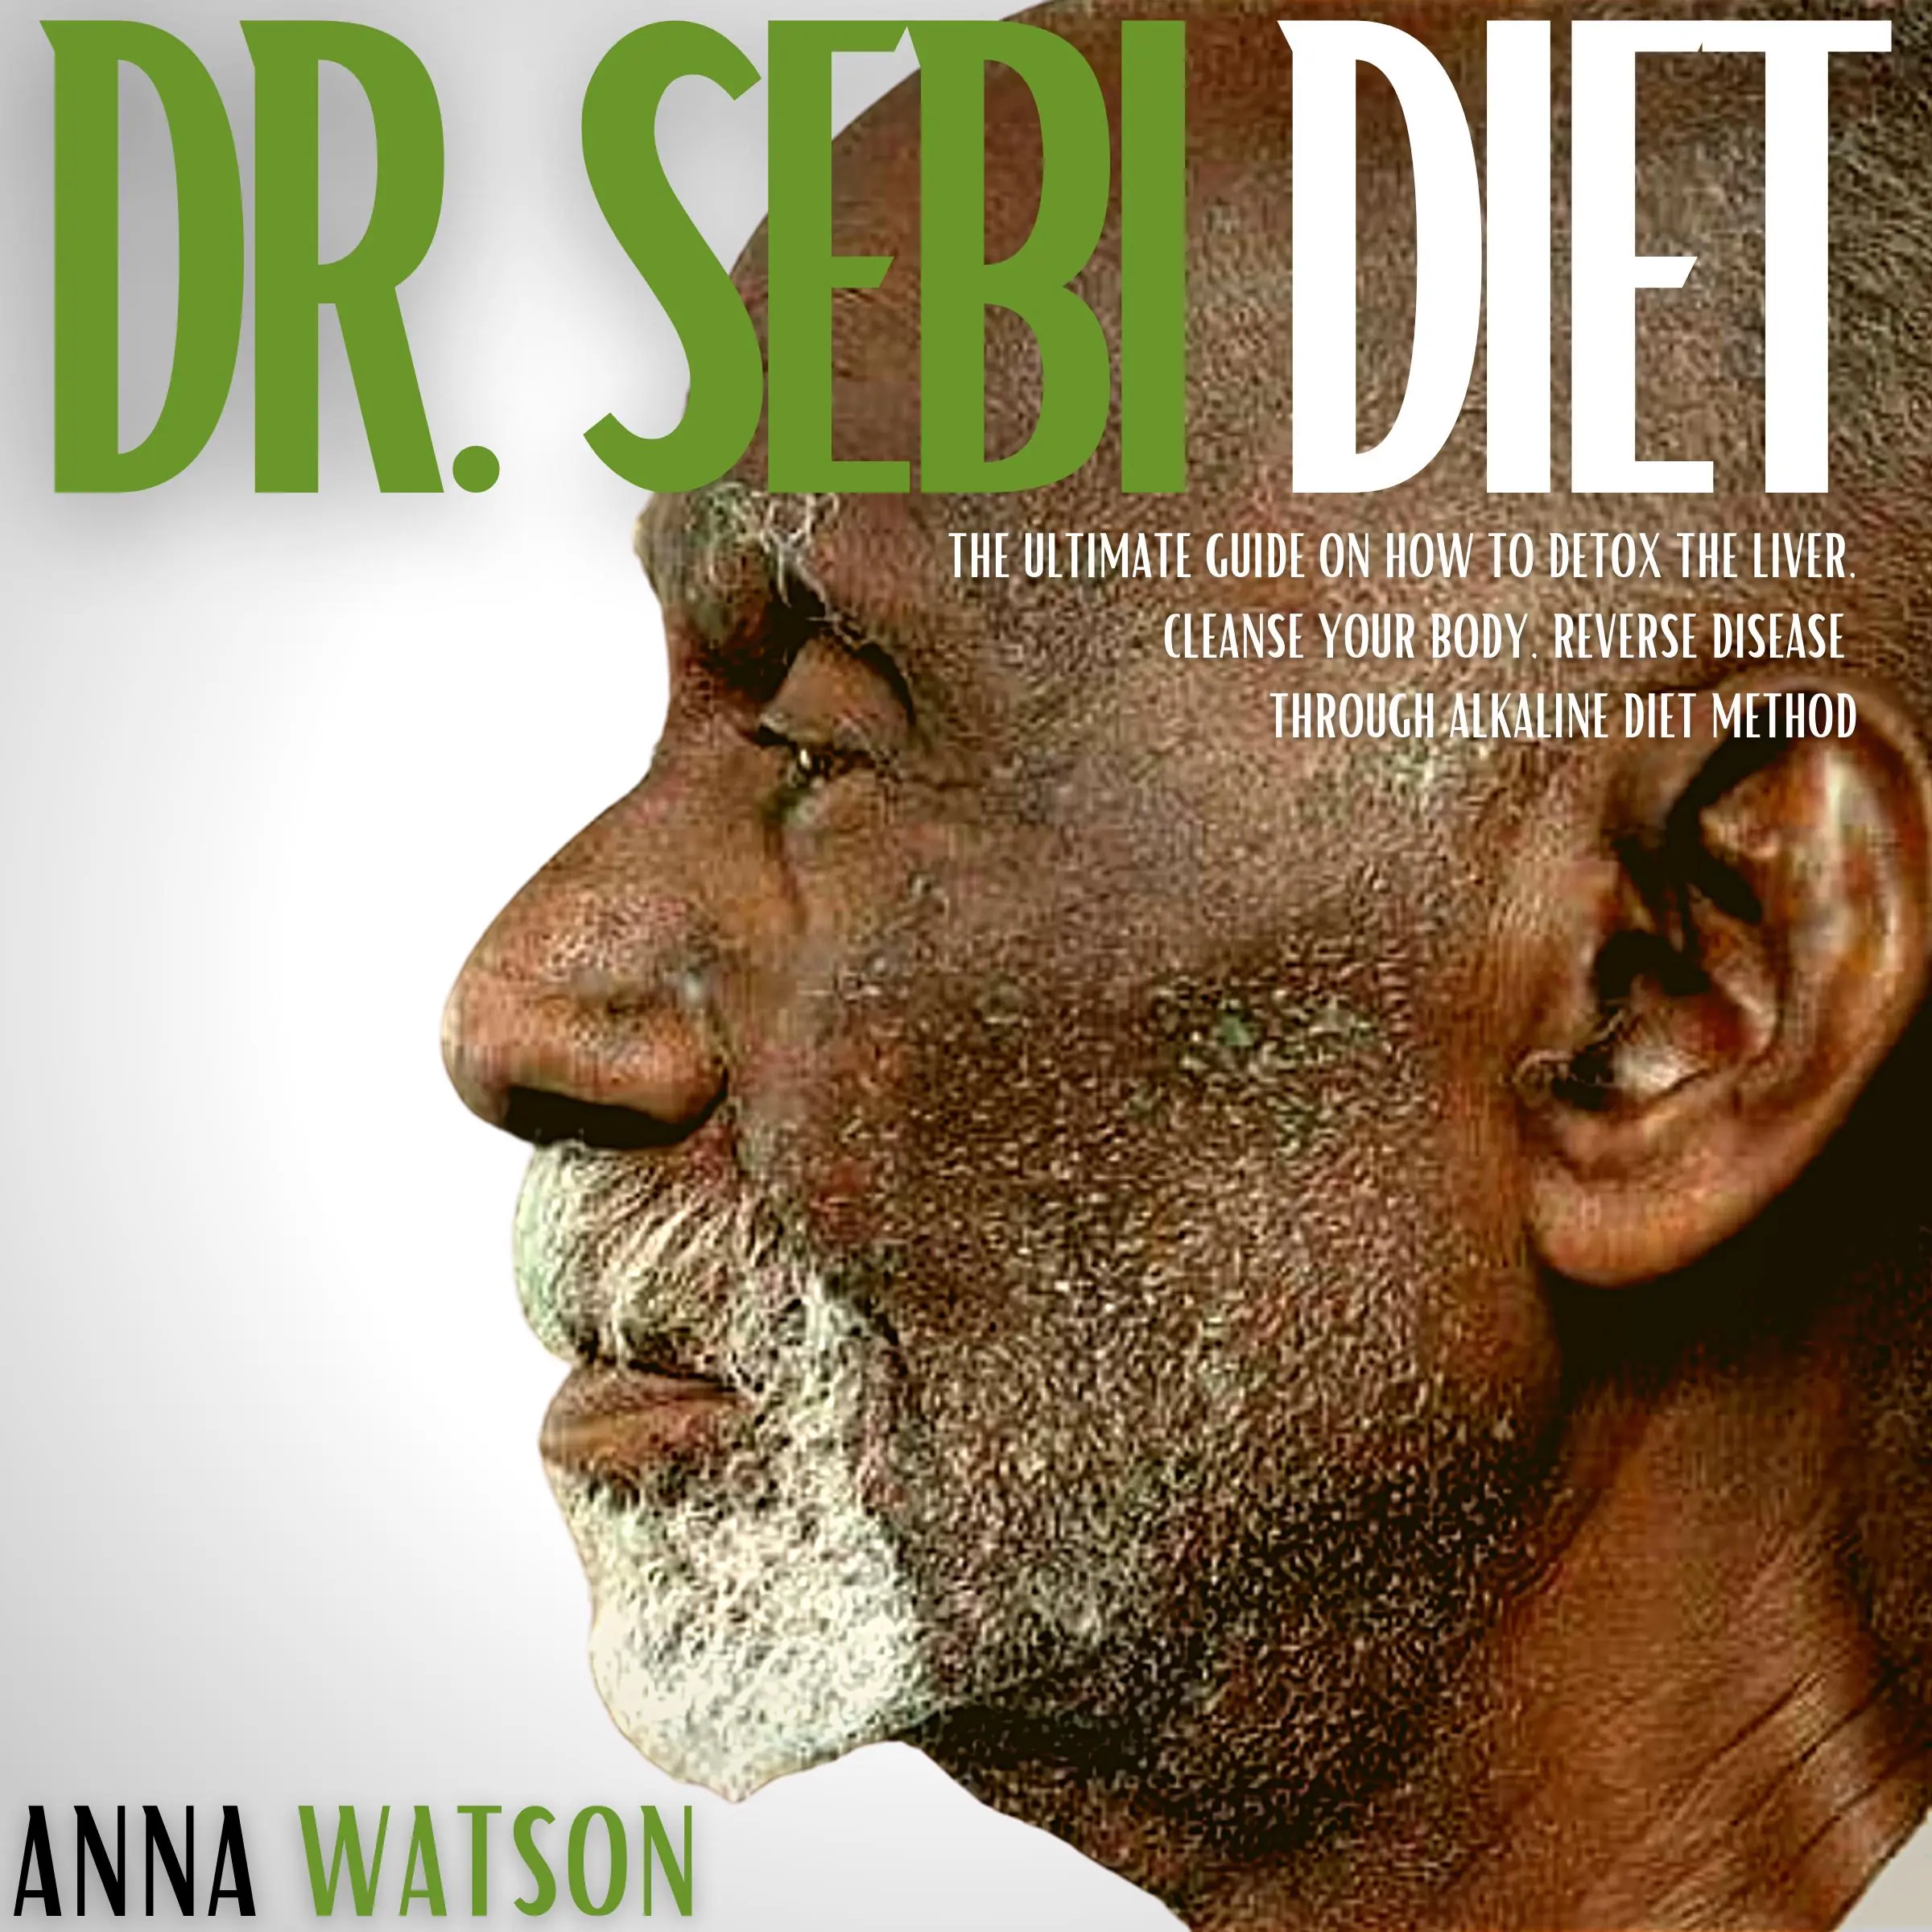 Dr. Sebi Diet Audiobook by Anna Watson